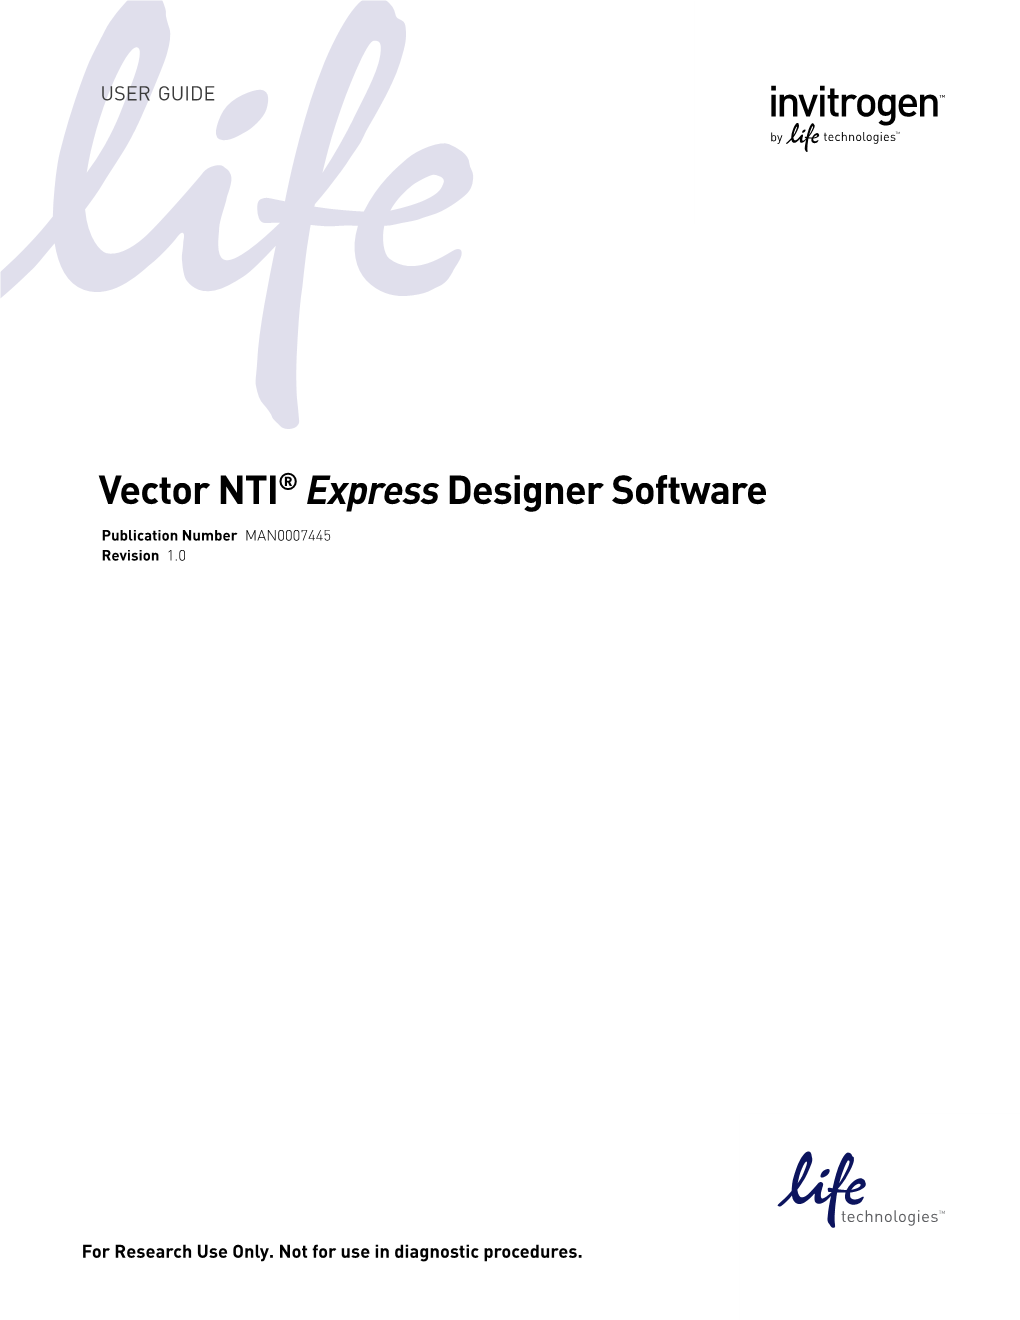 Vector NTI® Express Designer Software User Guide